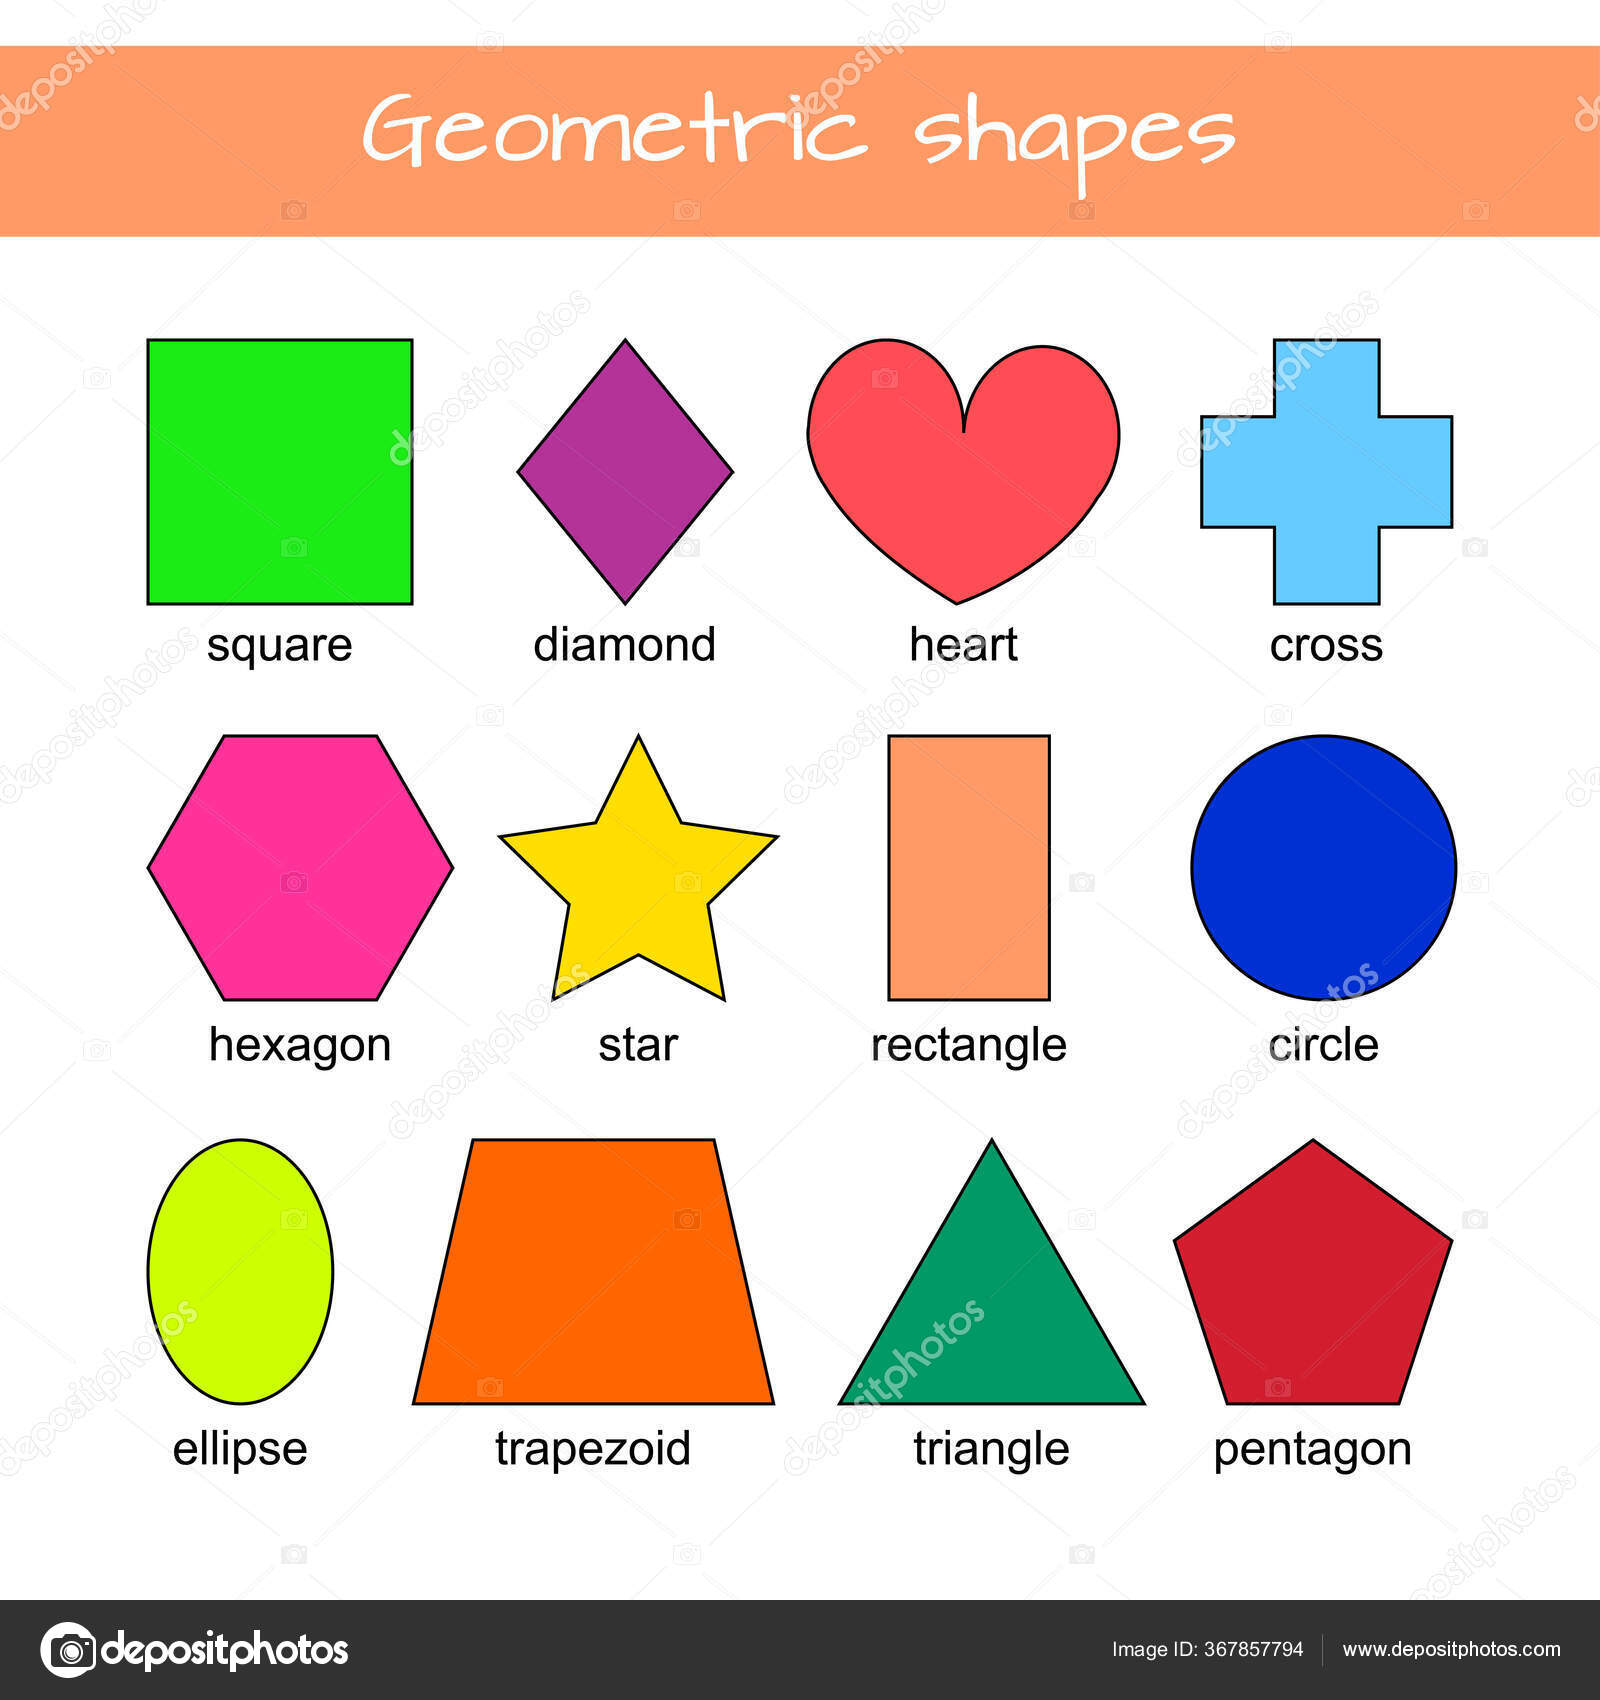 Examples of Geometric Shapes  Shapes kindergarten, Shapes for kids, Shapes  preschool